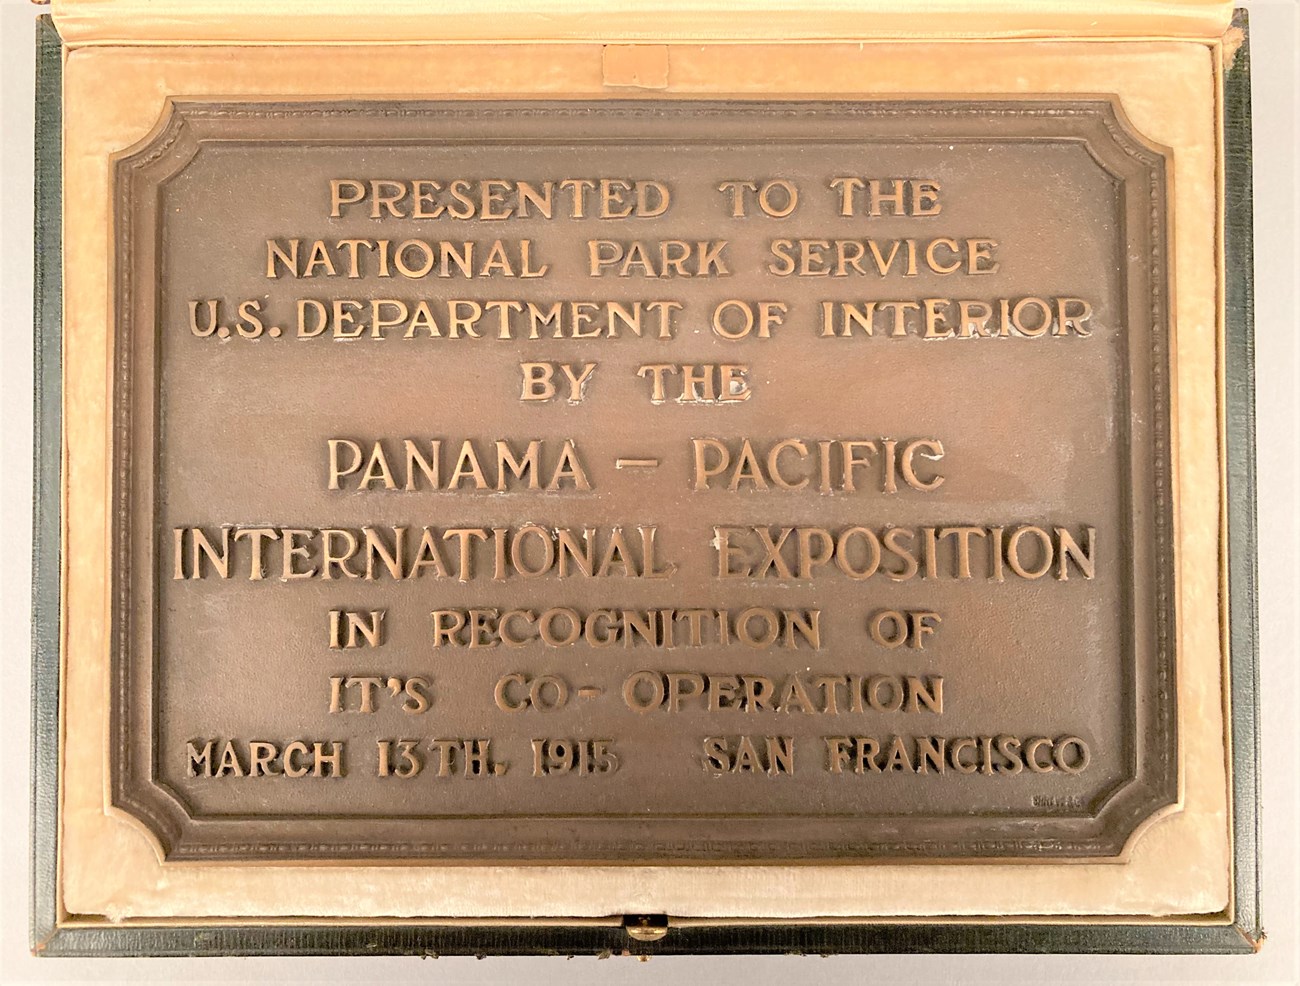 Bronze plaque thanking National Park Service